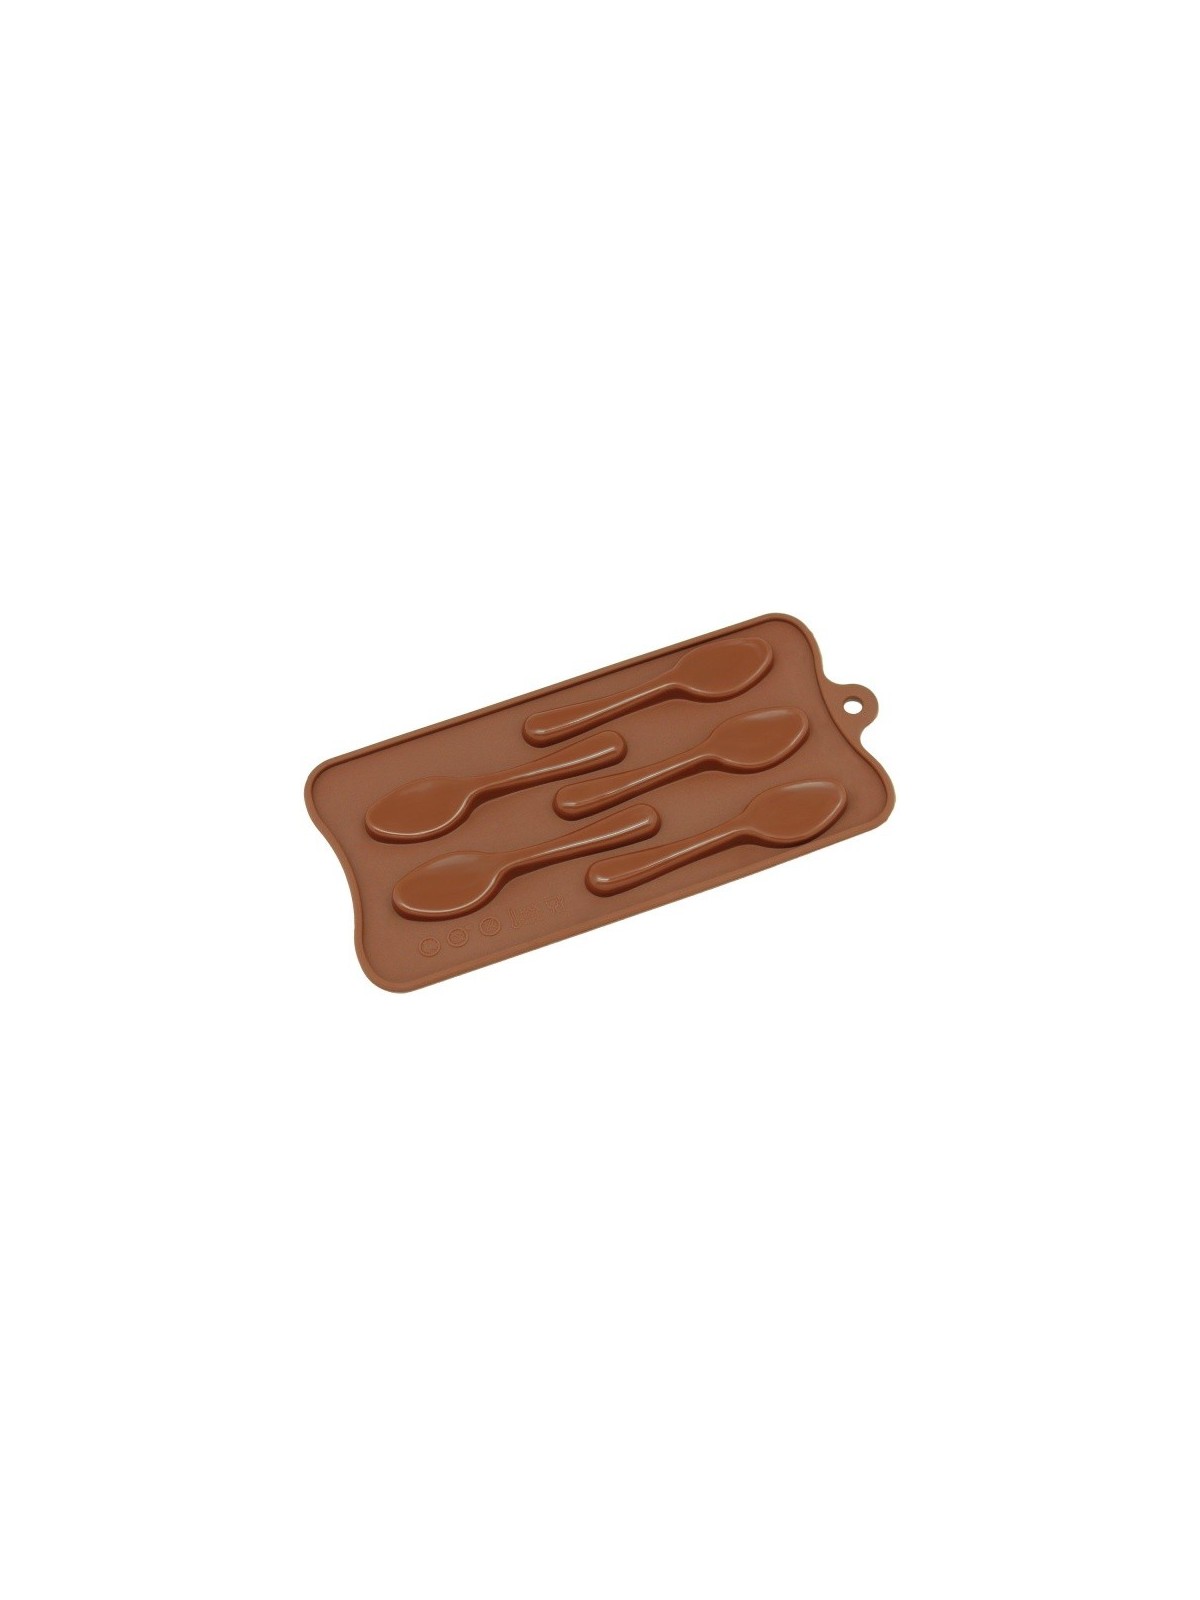 Silikonform für Schokolade - Löffel